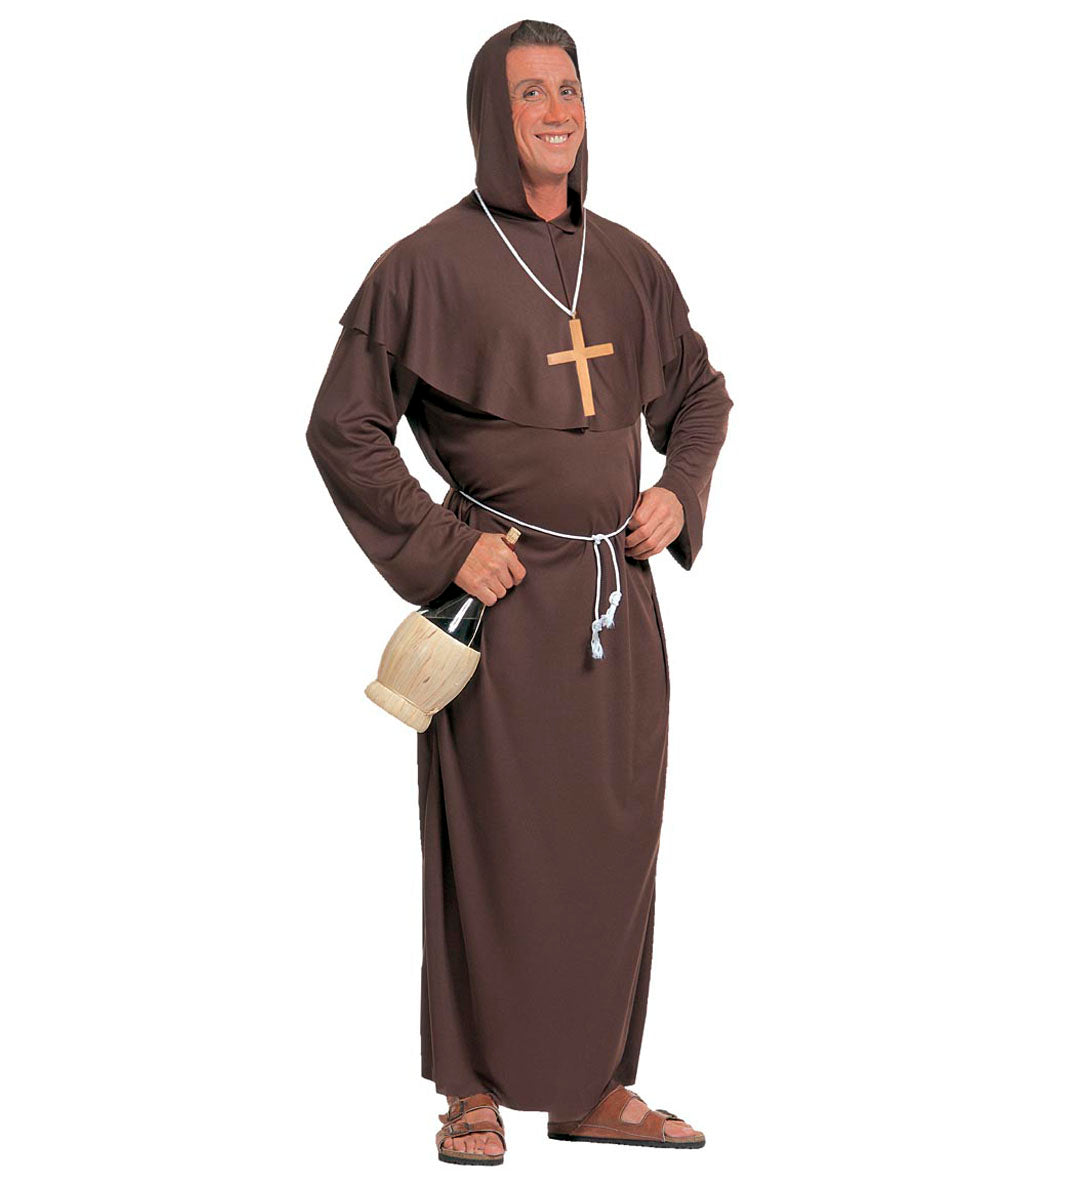 Gold Cross monk costume accessory